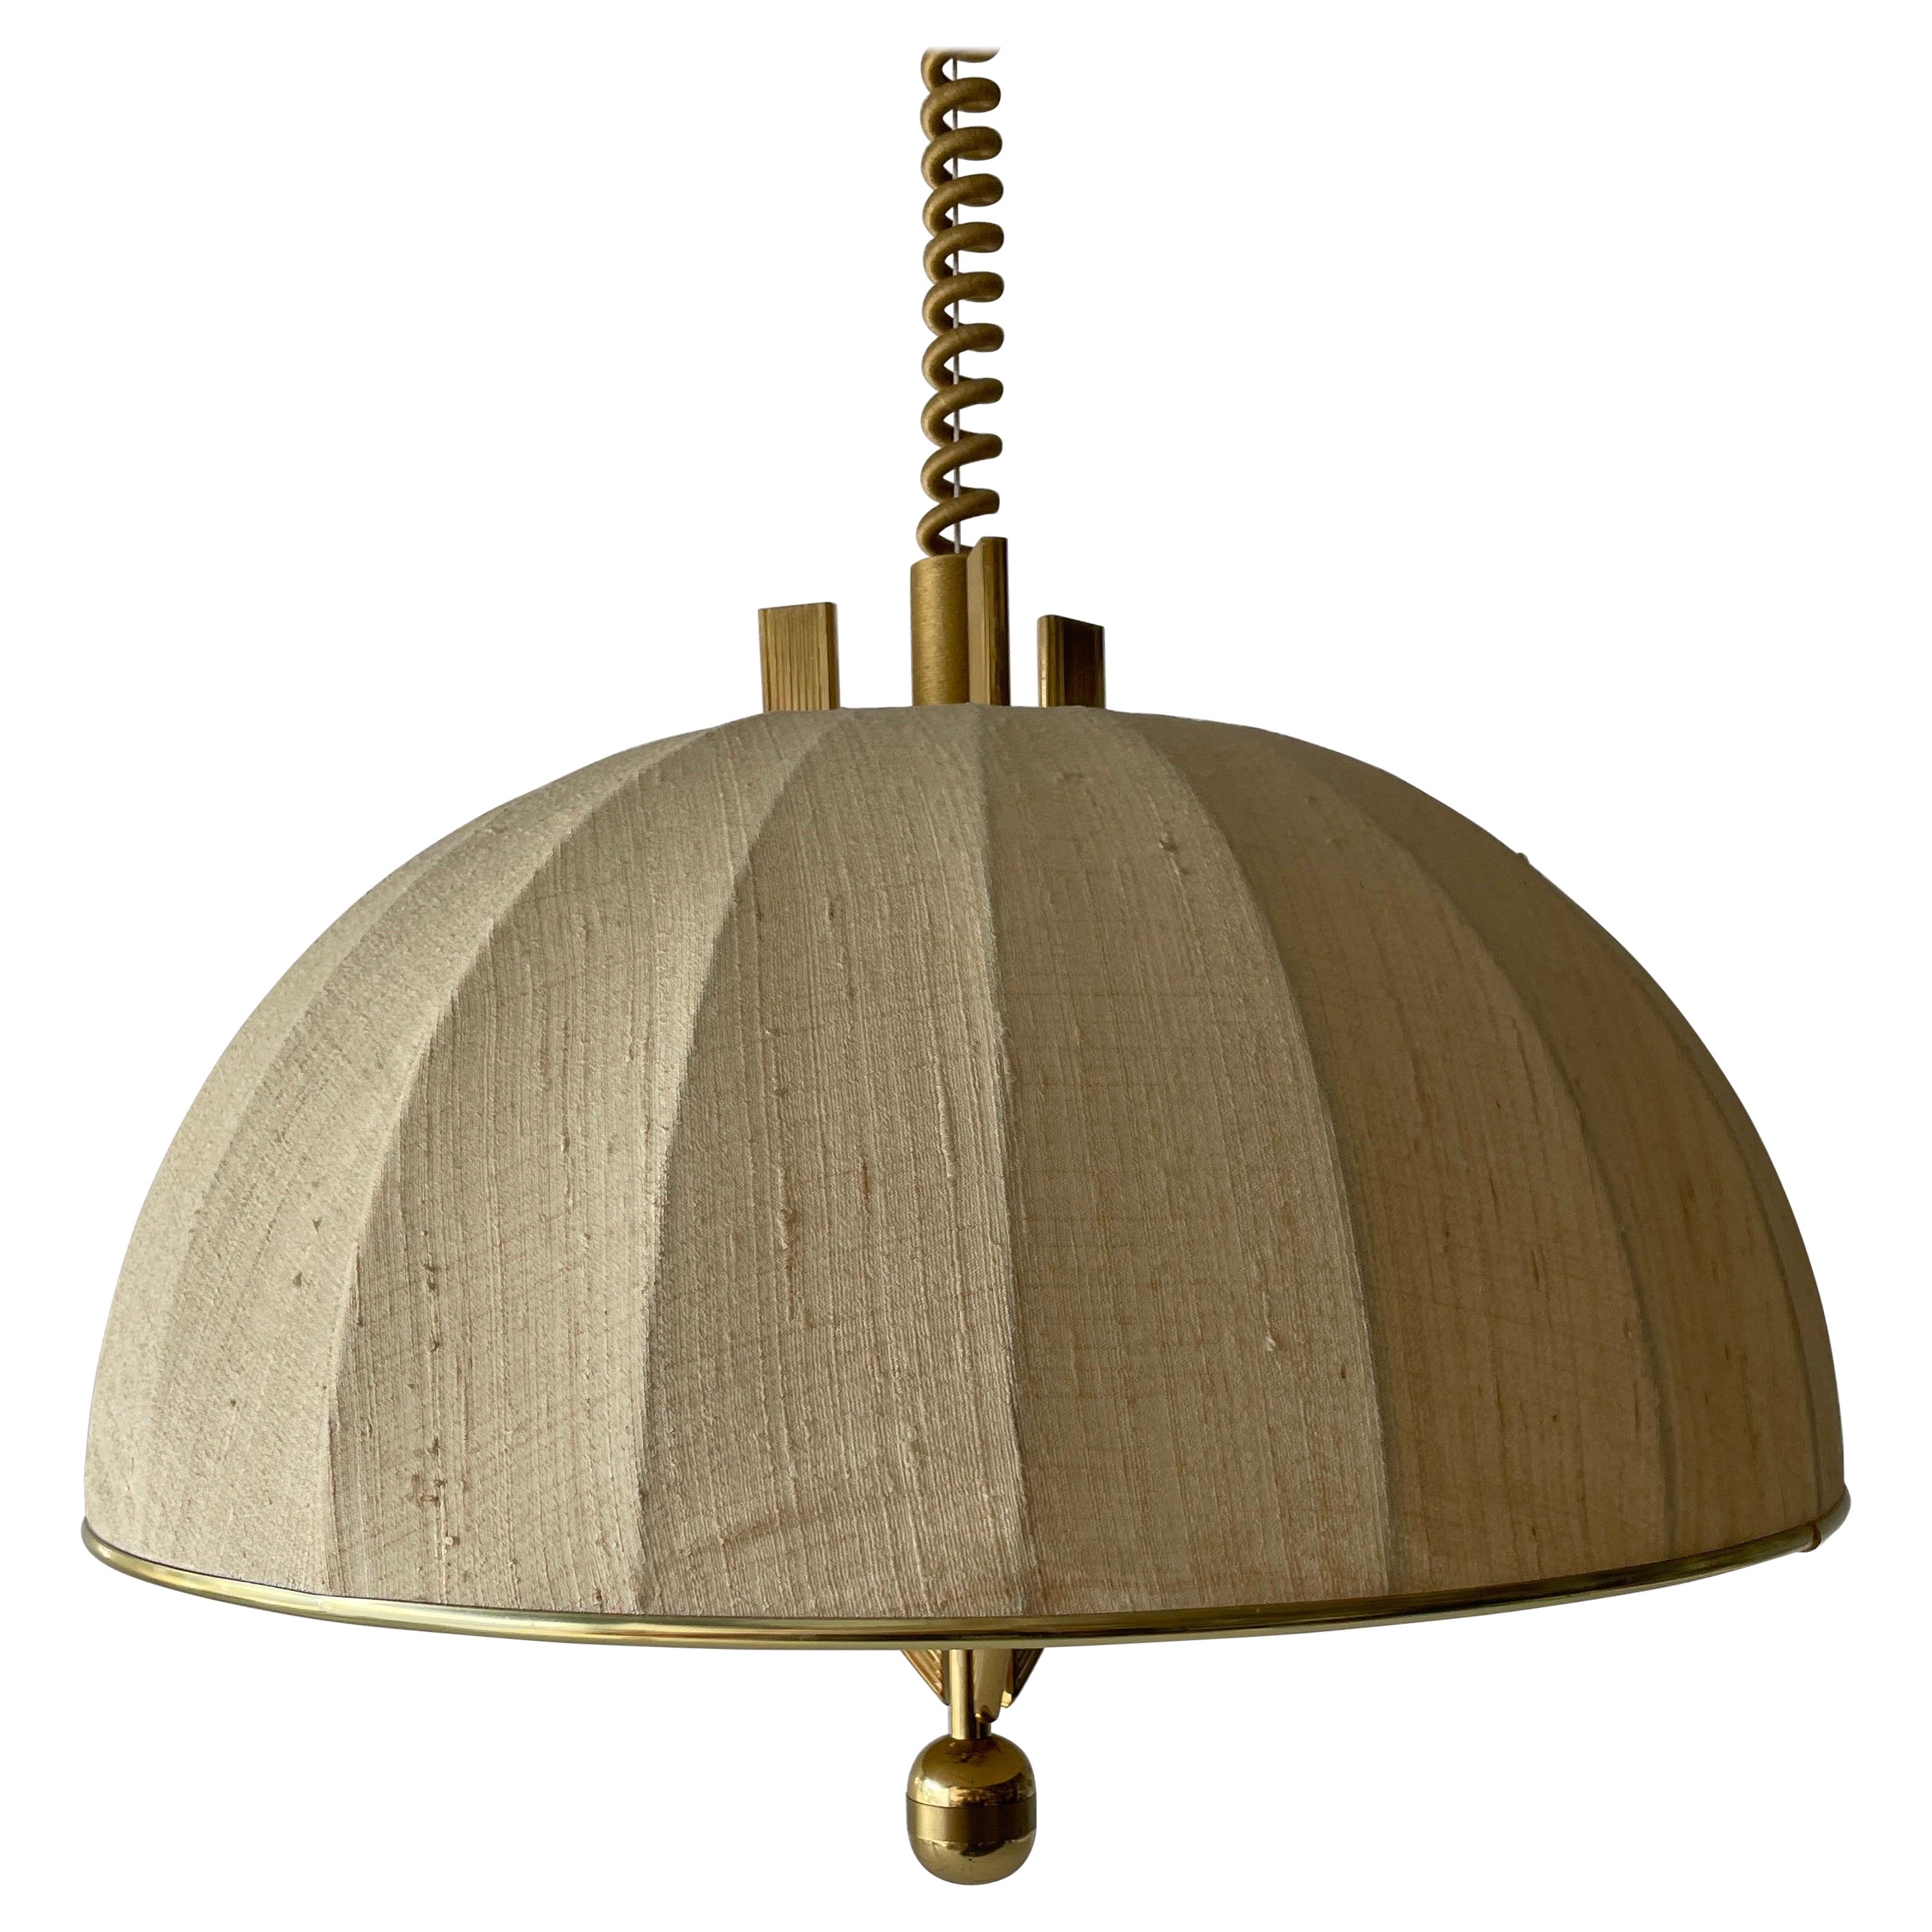 Brass Body & Fabric Shade Mid-Century Modern Pendant Lamp by Wkr, 1970s, Germany